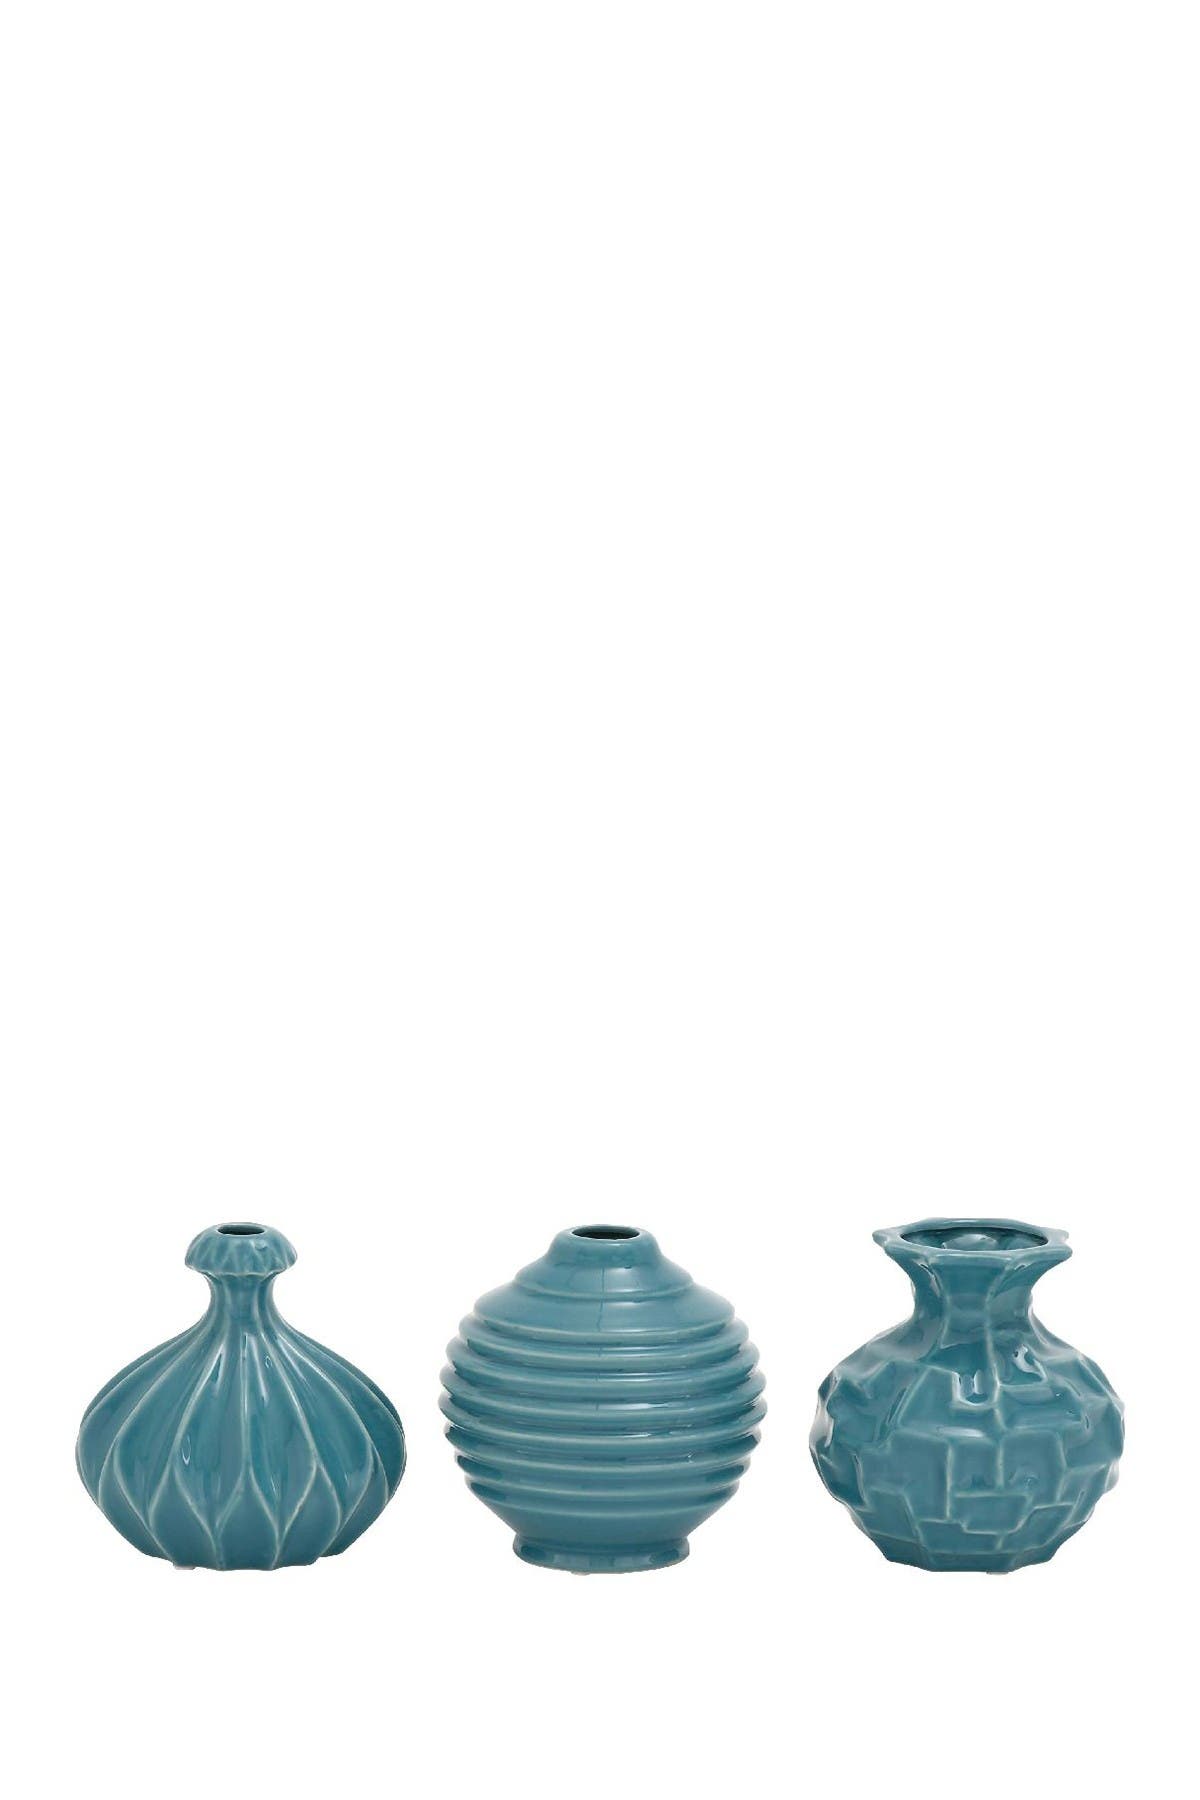 Willow Row Teal Blue Modern Short Vase